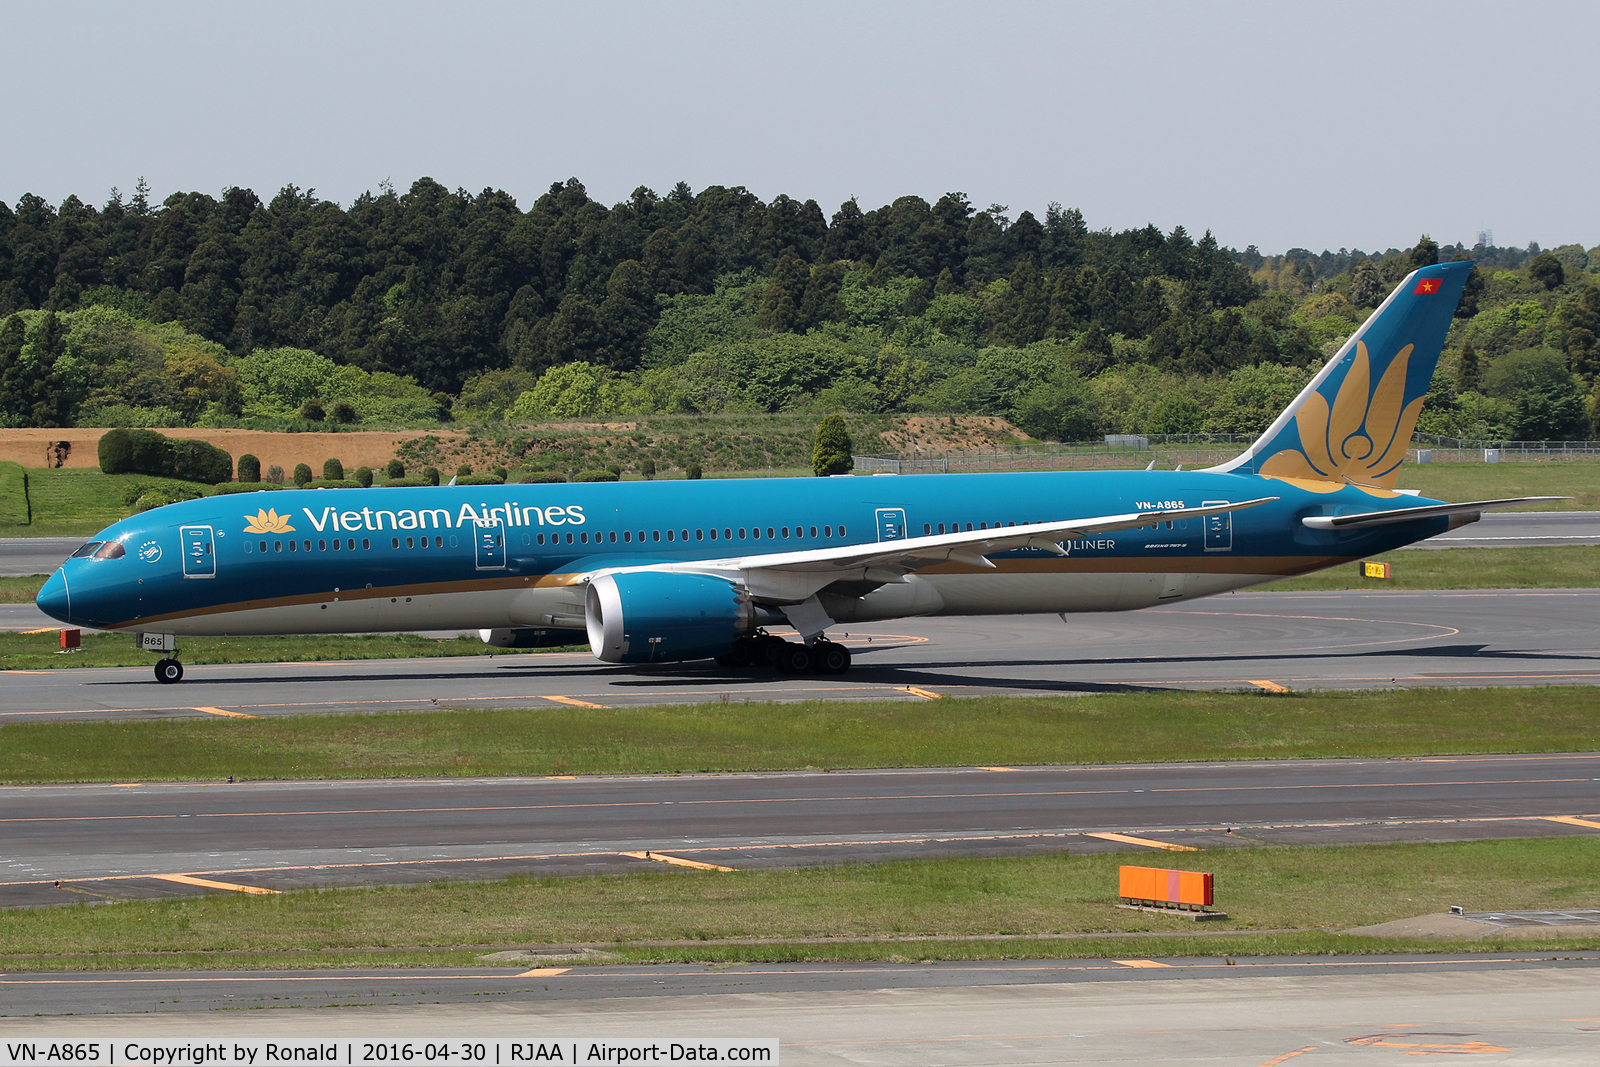 VN-A865, 2015 Boeing 787-9 Dreamliner Dreamliner C/N 38761, at nrt